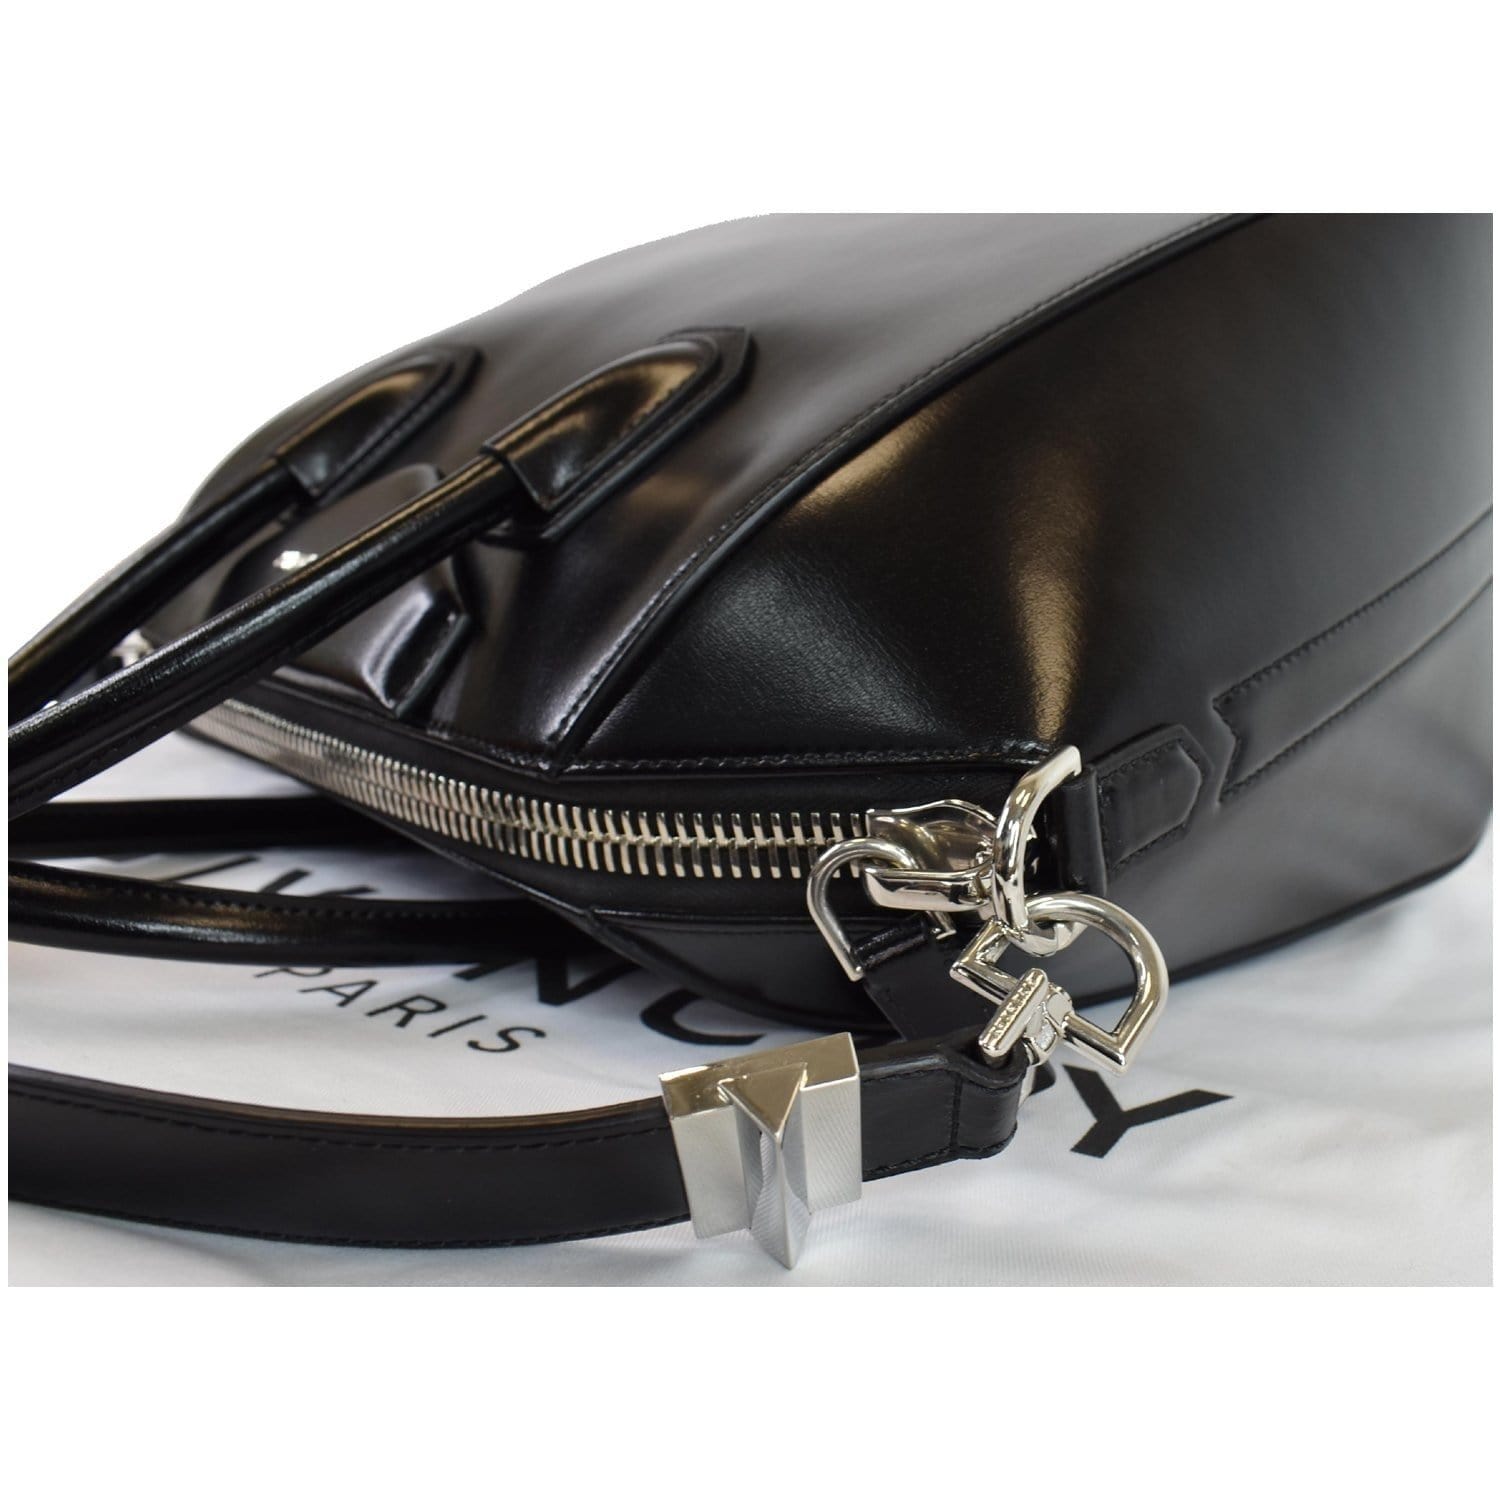 Antigona Small Leather Tote Bag in Black - Givenchy